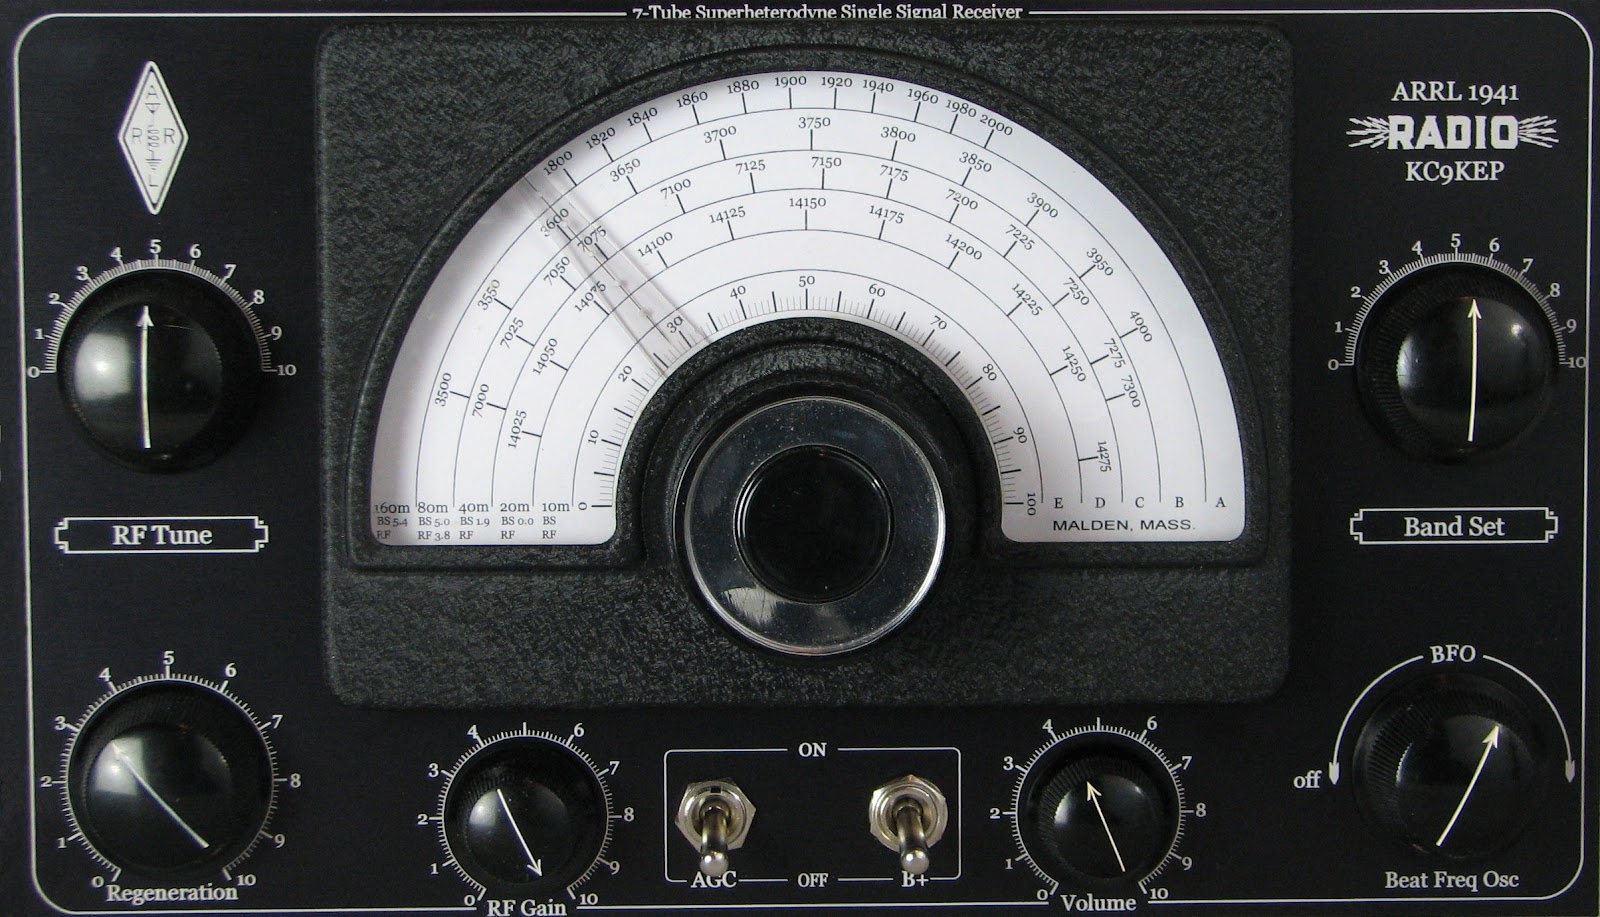 KC9KEP's ARRL 1941 7-Tube Superheterodyne Homebrew Radio